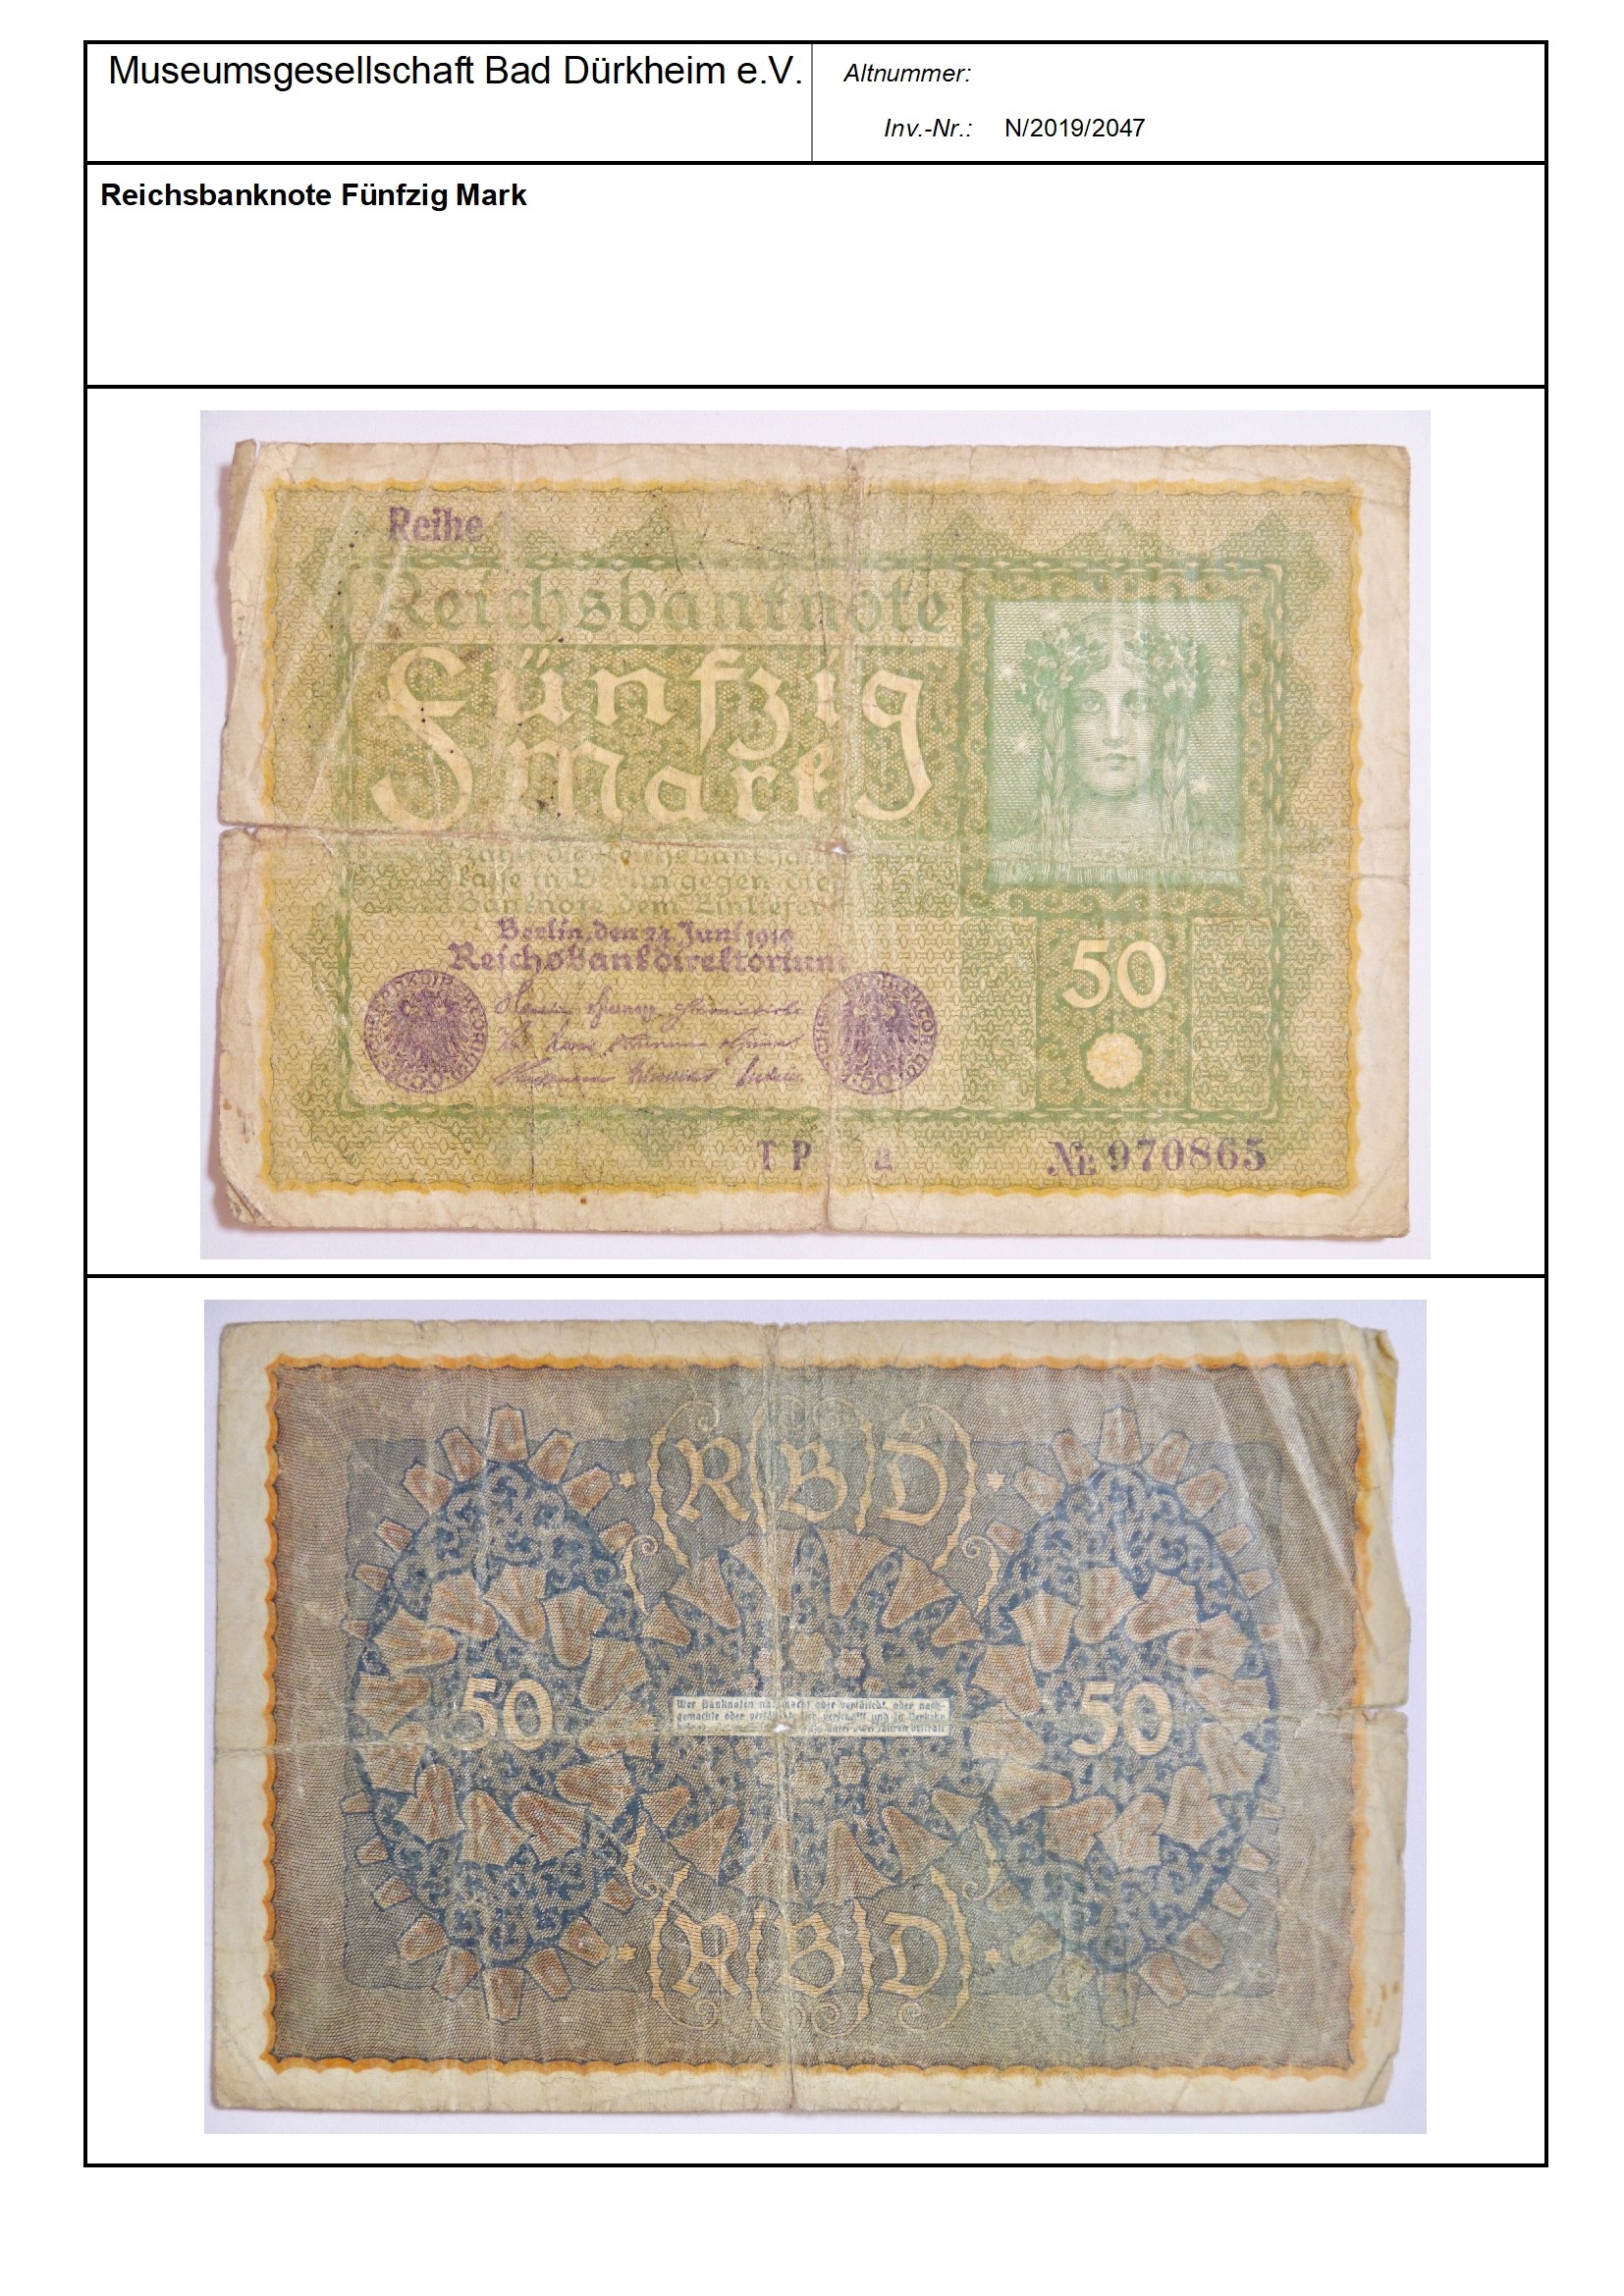 Reichsbanknote Fünfzig Mark
Serien-Nummer: TP Nr. 970865 (Museumsgesellschaft Bad Dürkheim e.V. CC BY-NC-SA)